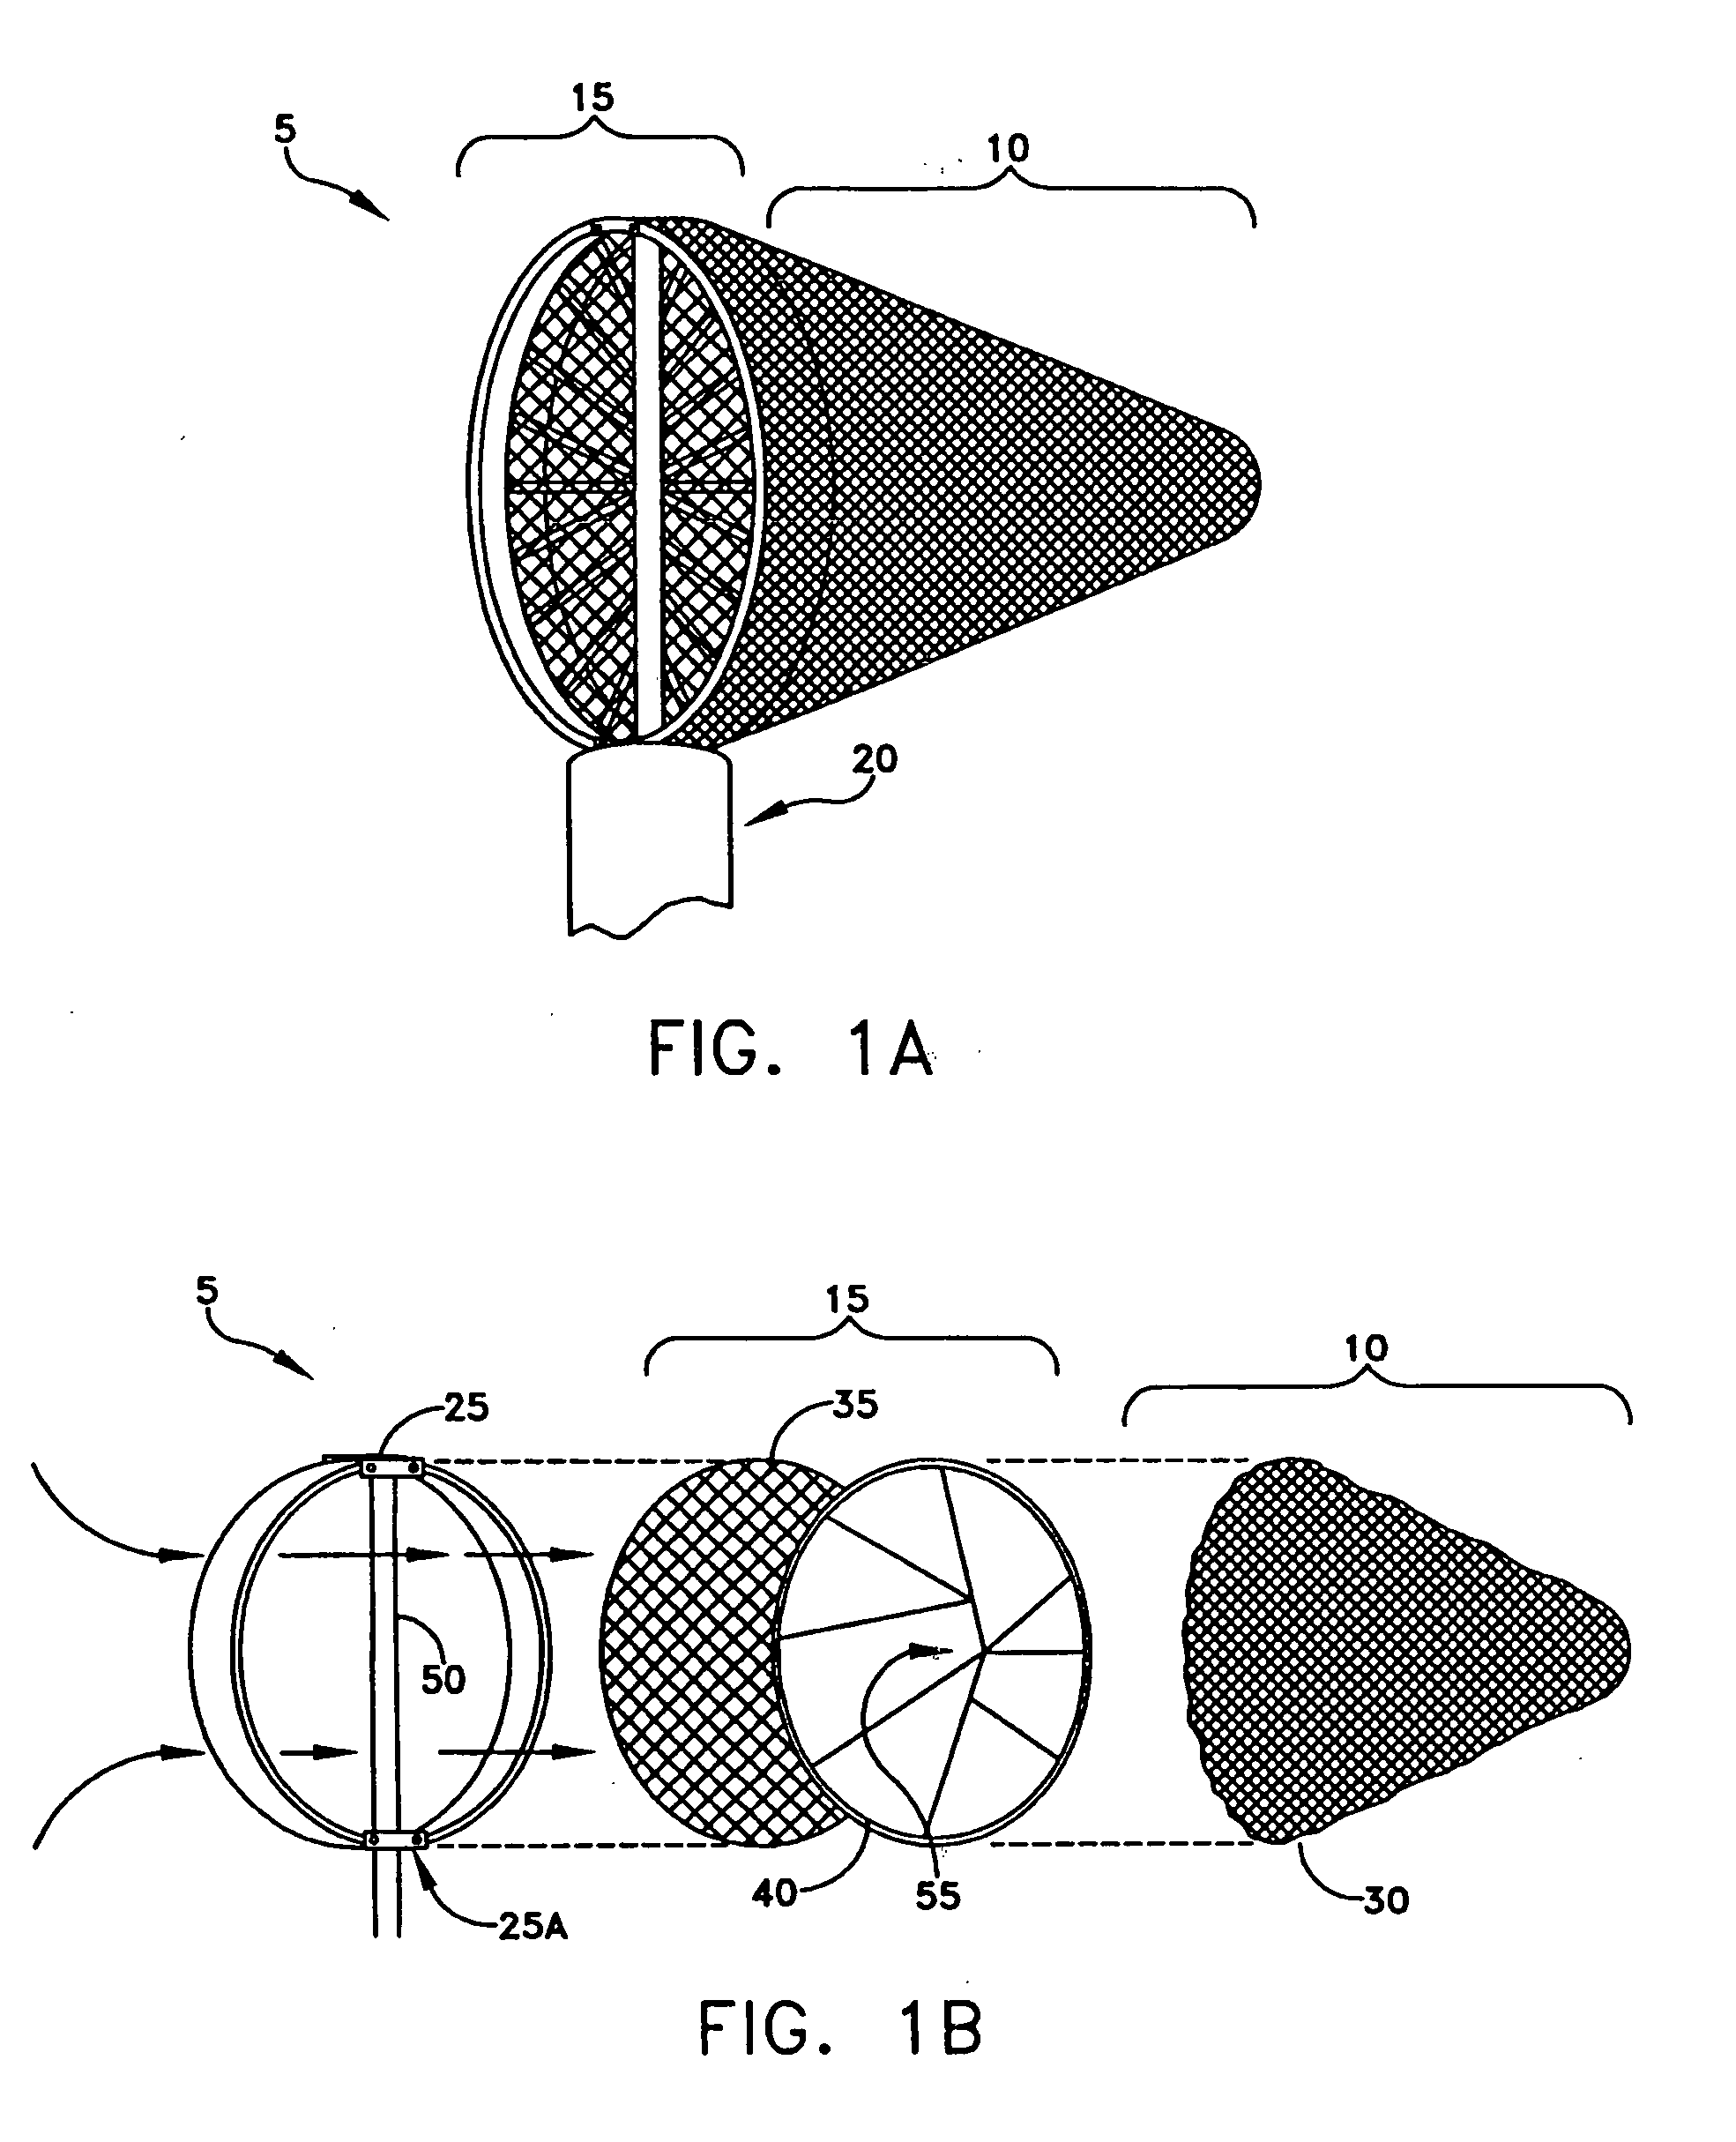 Intravascular filter with debris entrapment mechanism